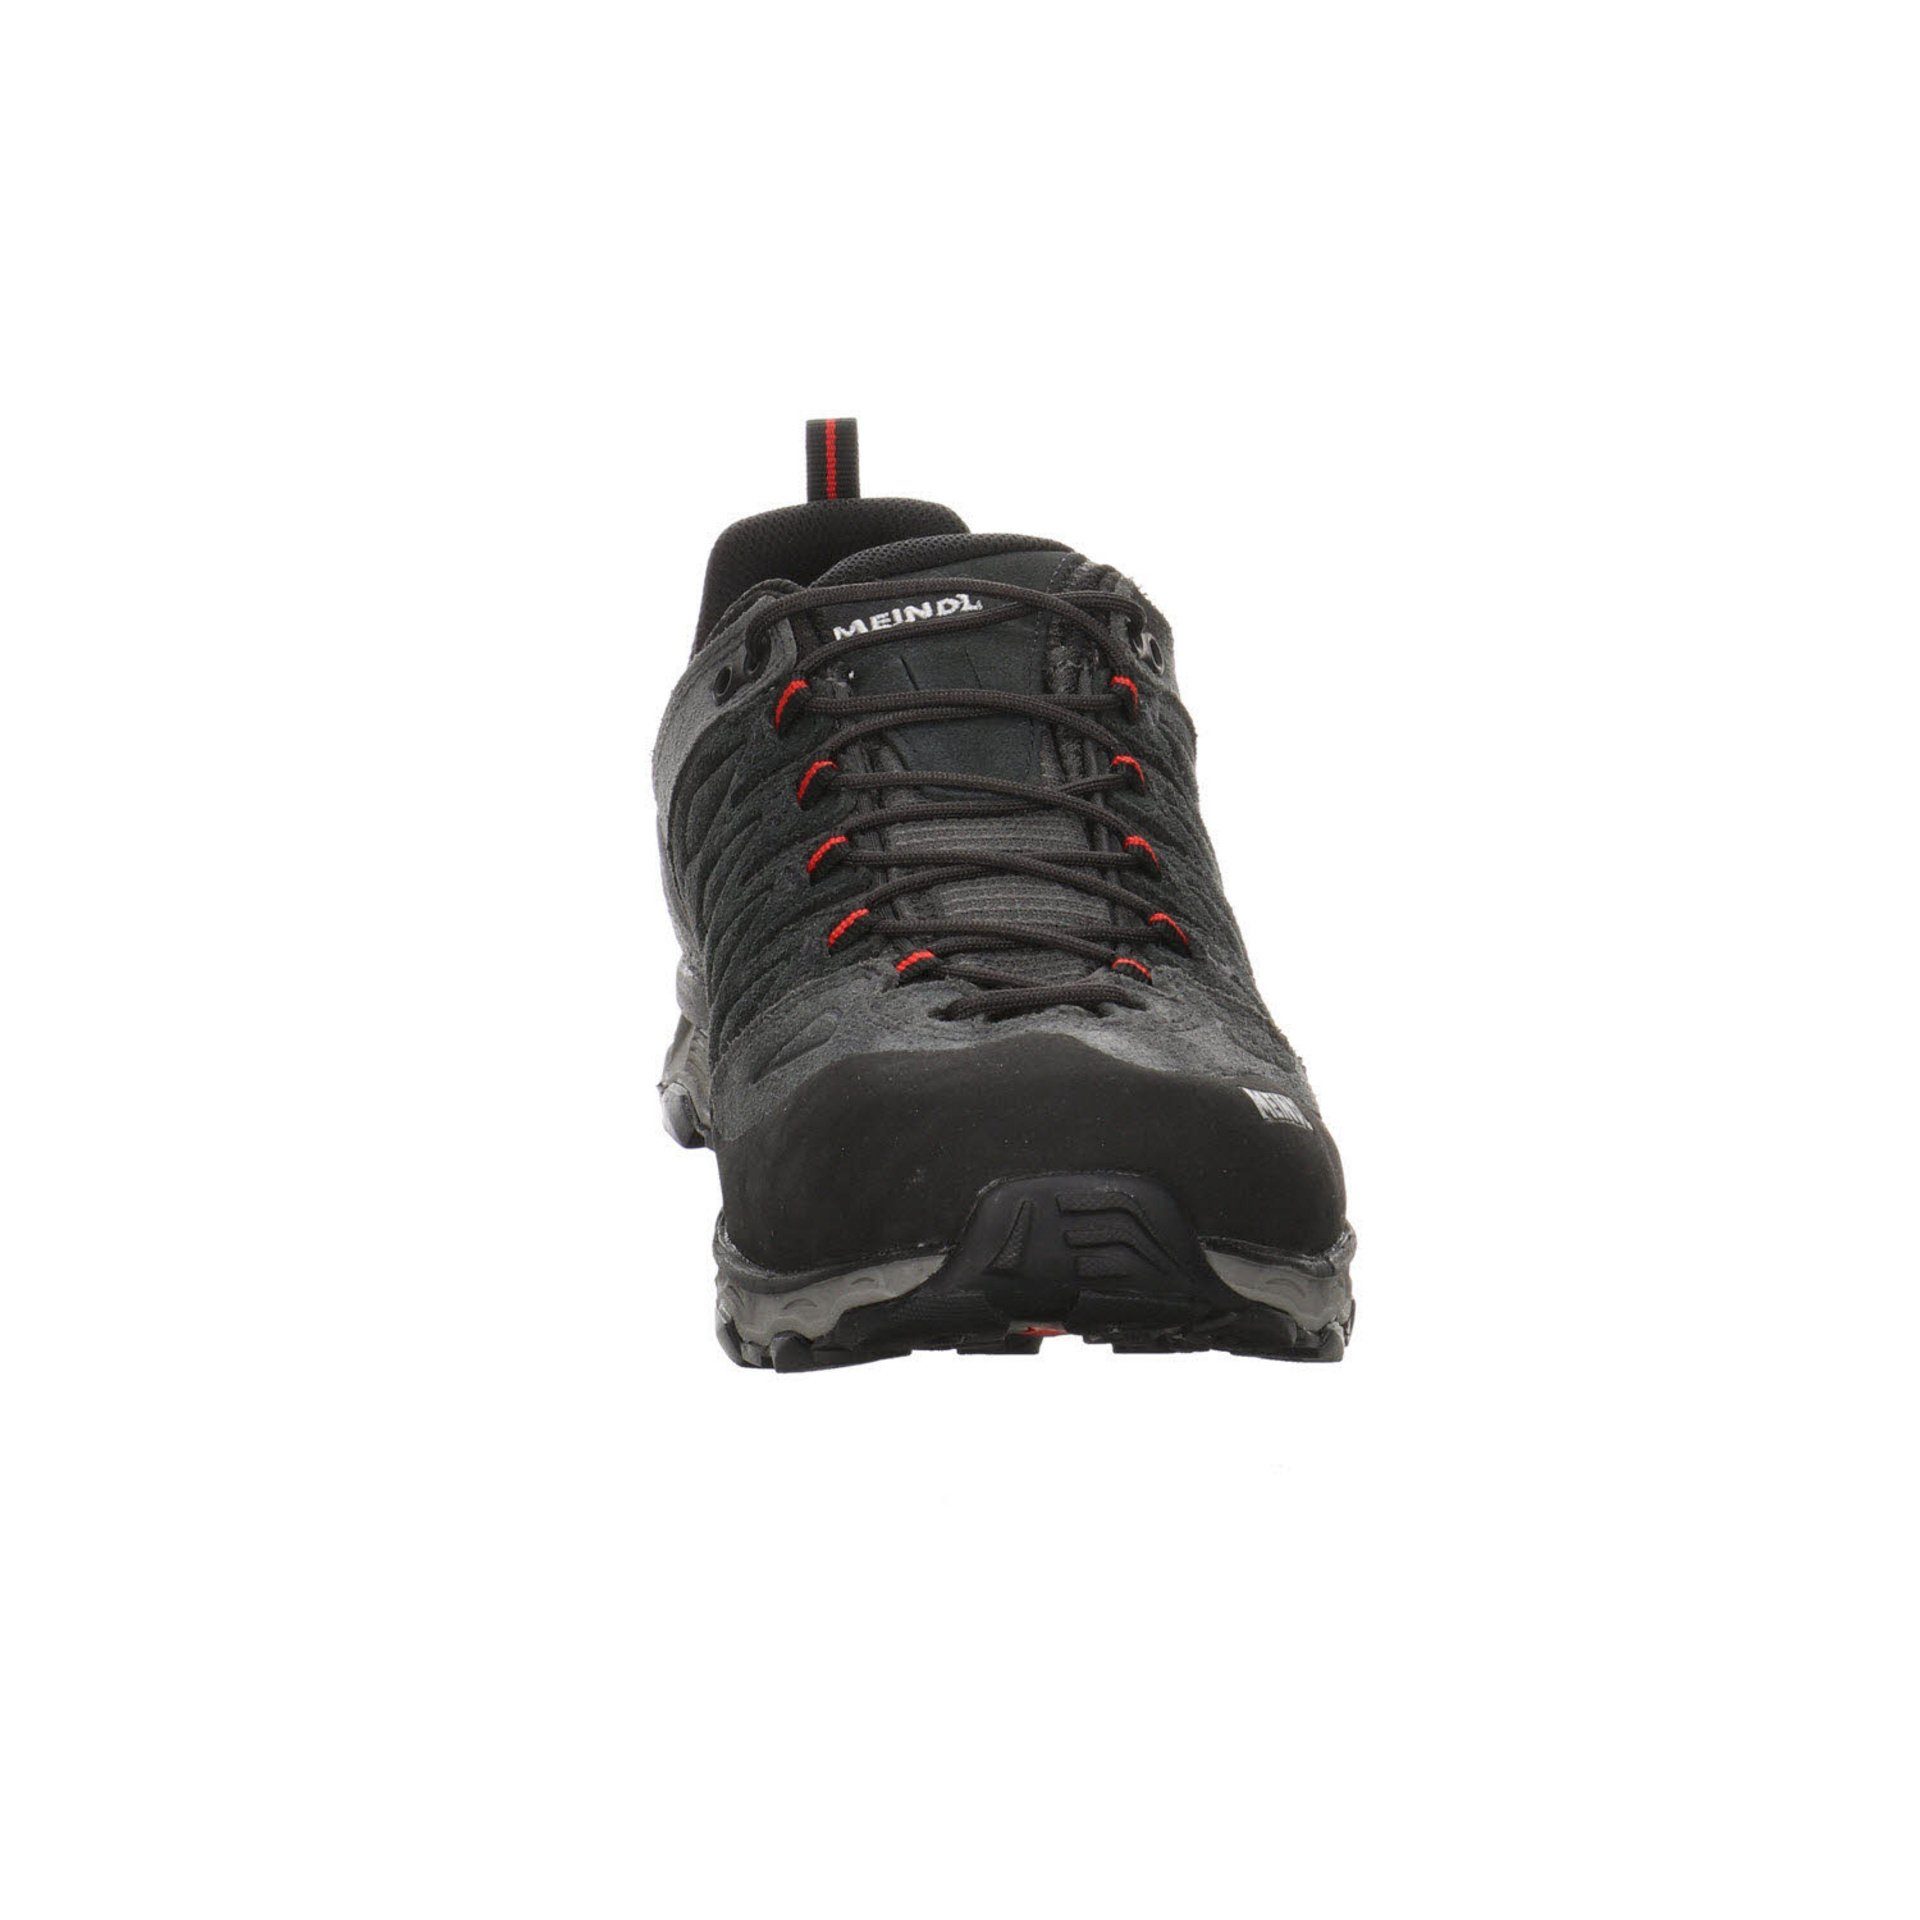 Meindl Herren Outdoor Schuhe kombiniert GTX Outdoorschuh m Lite Leder-/Textilkombination Outdoorschuh Trail schwarz